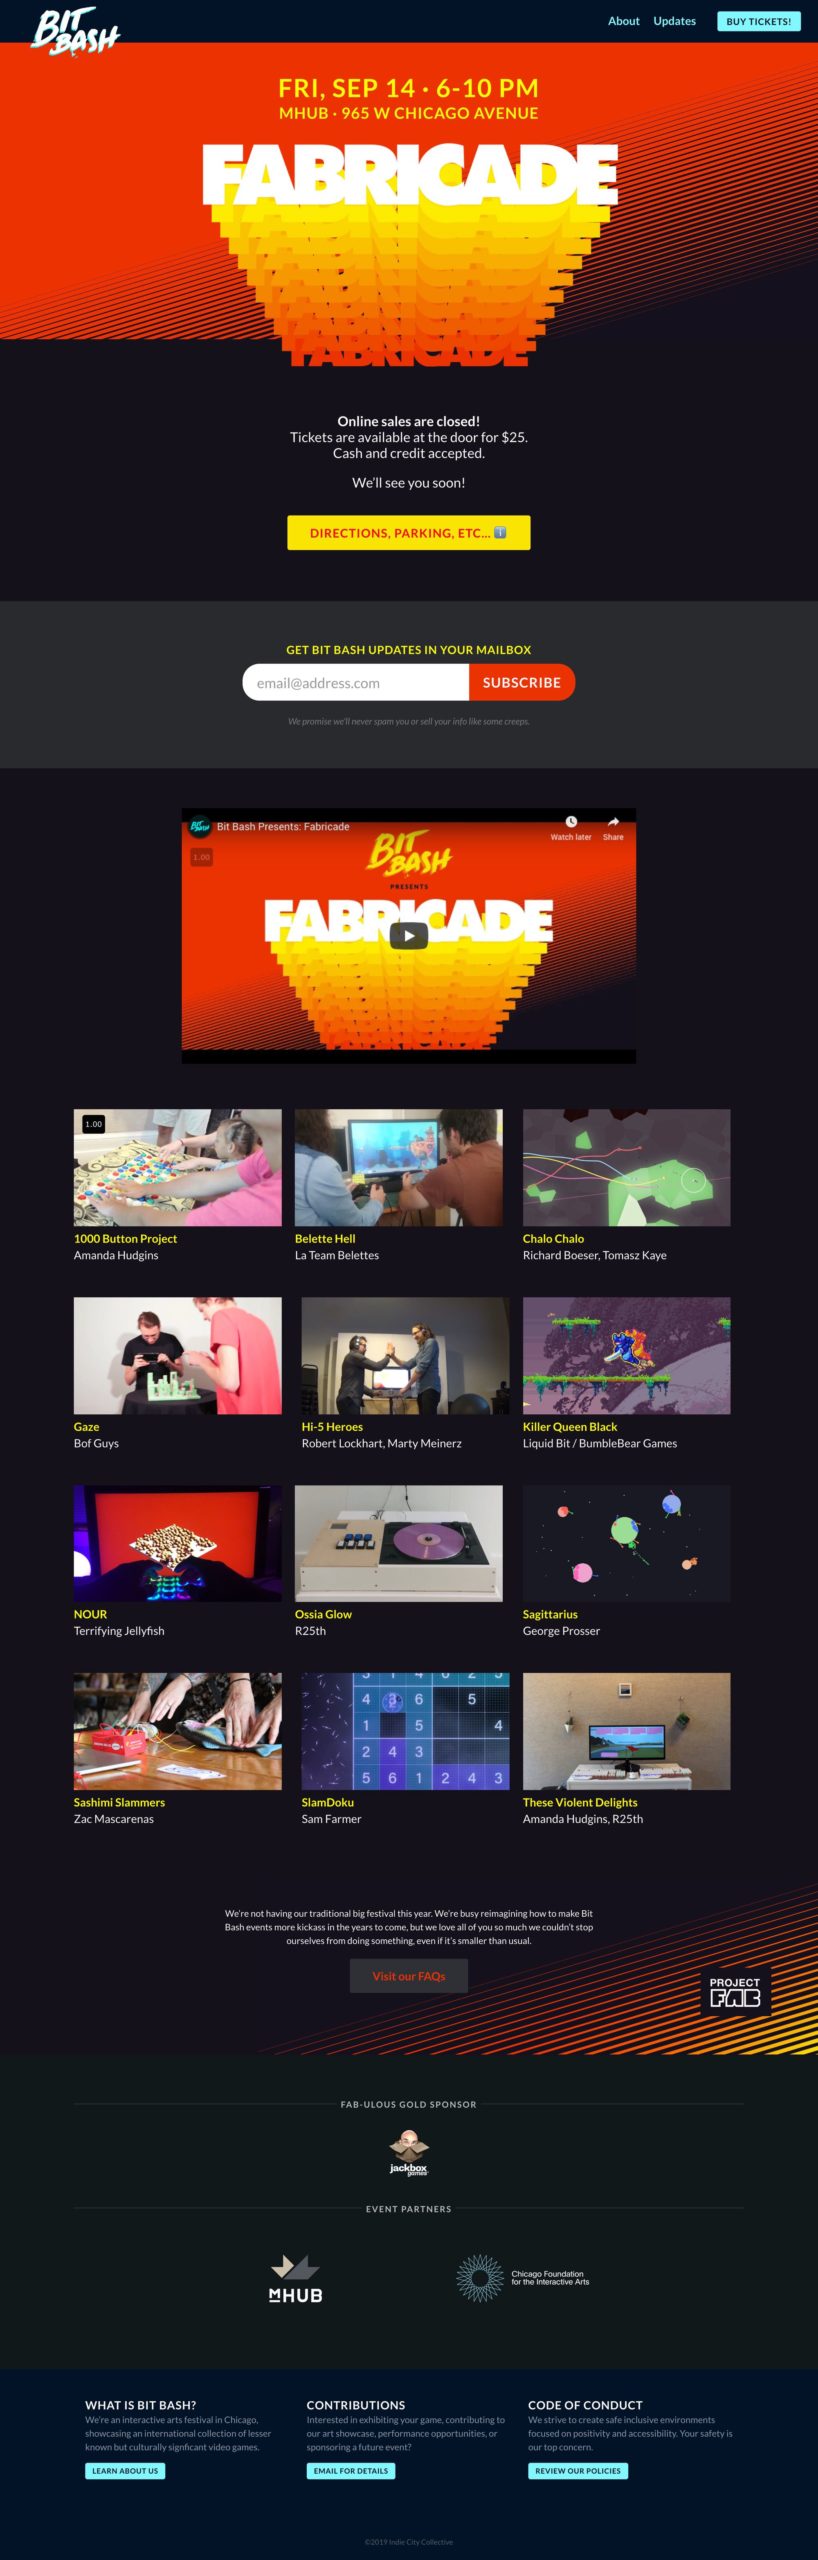 Fabricade Homepage